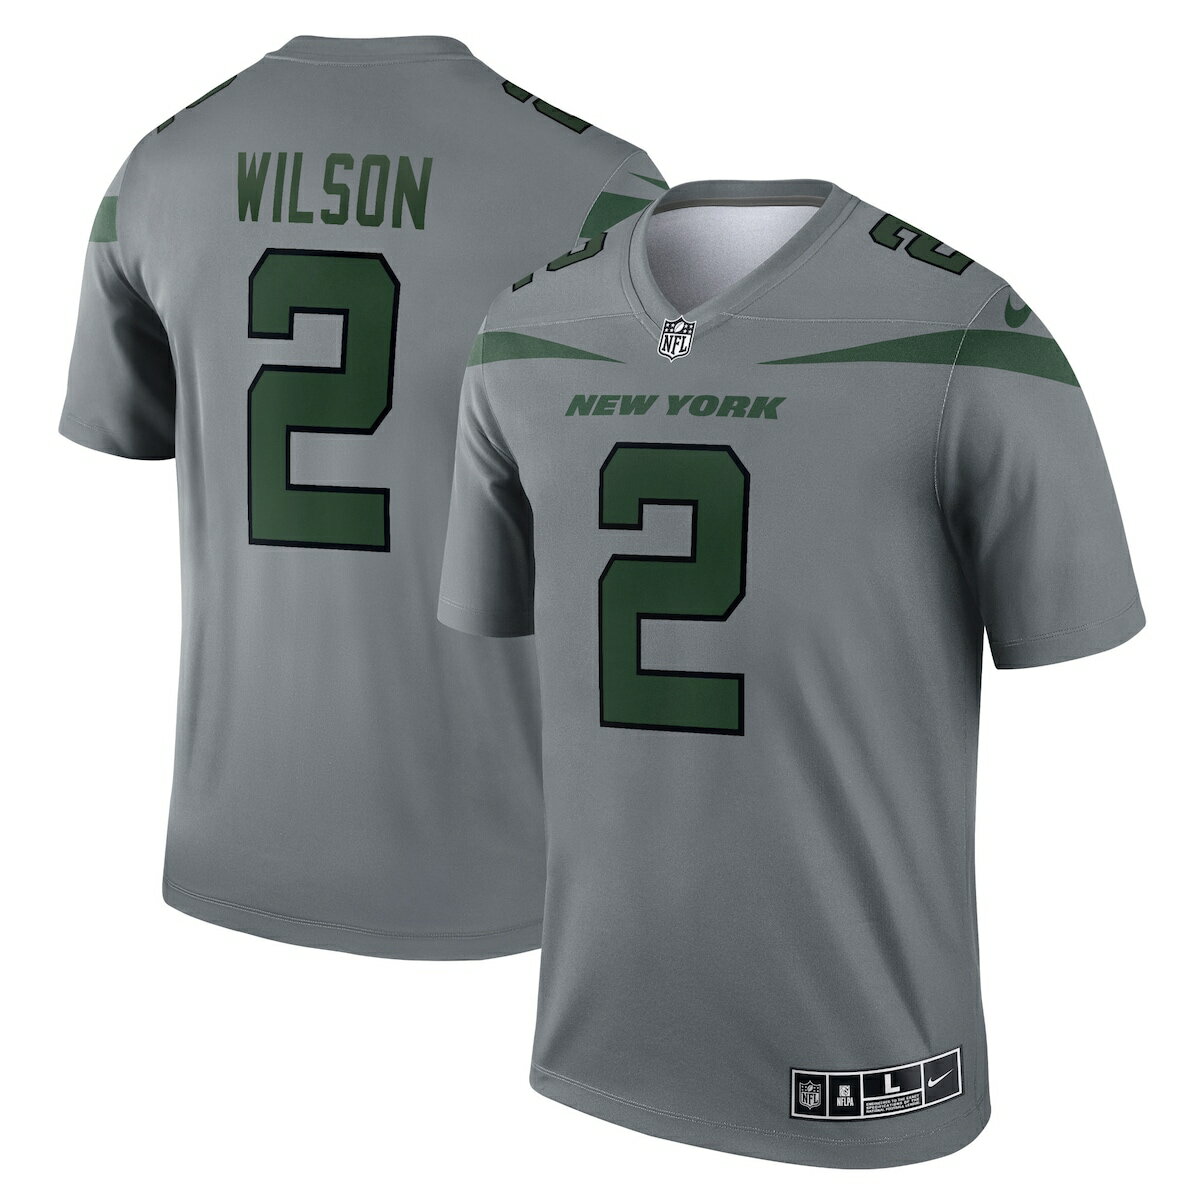 NFL ジェッツ ザック・ウィルソン ユニフォーム Nike ナイキ メンズ グレイ (Men's Nike Inverted Legend Jersey)